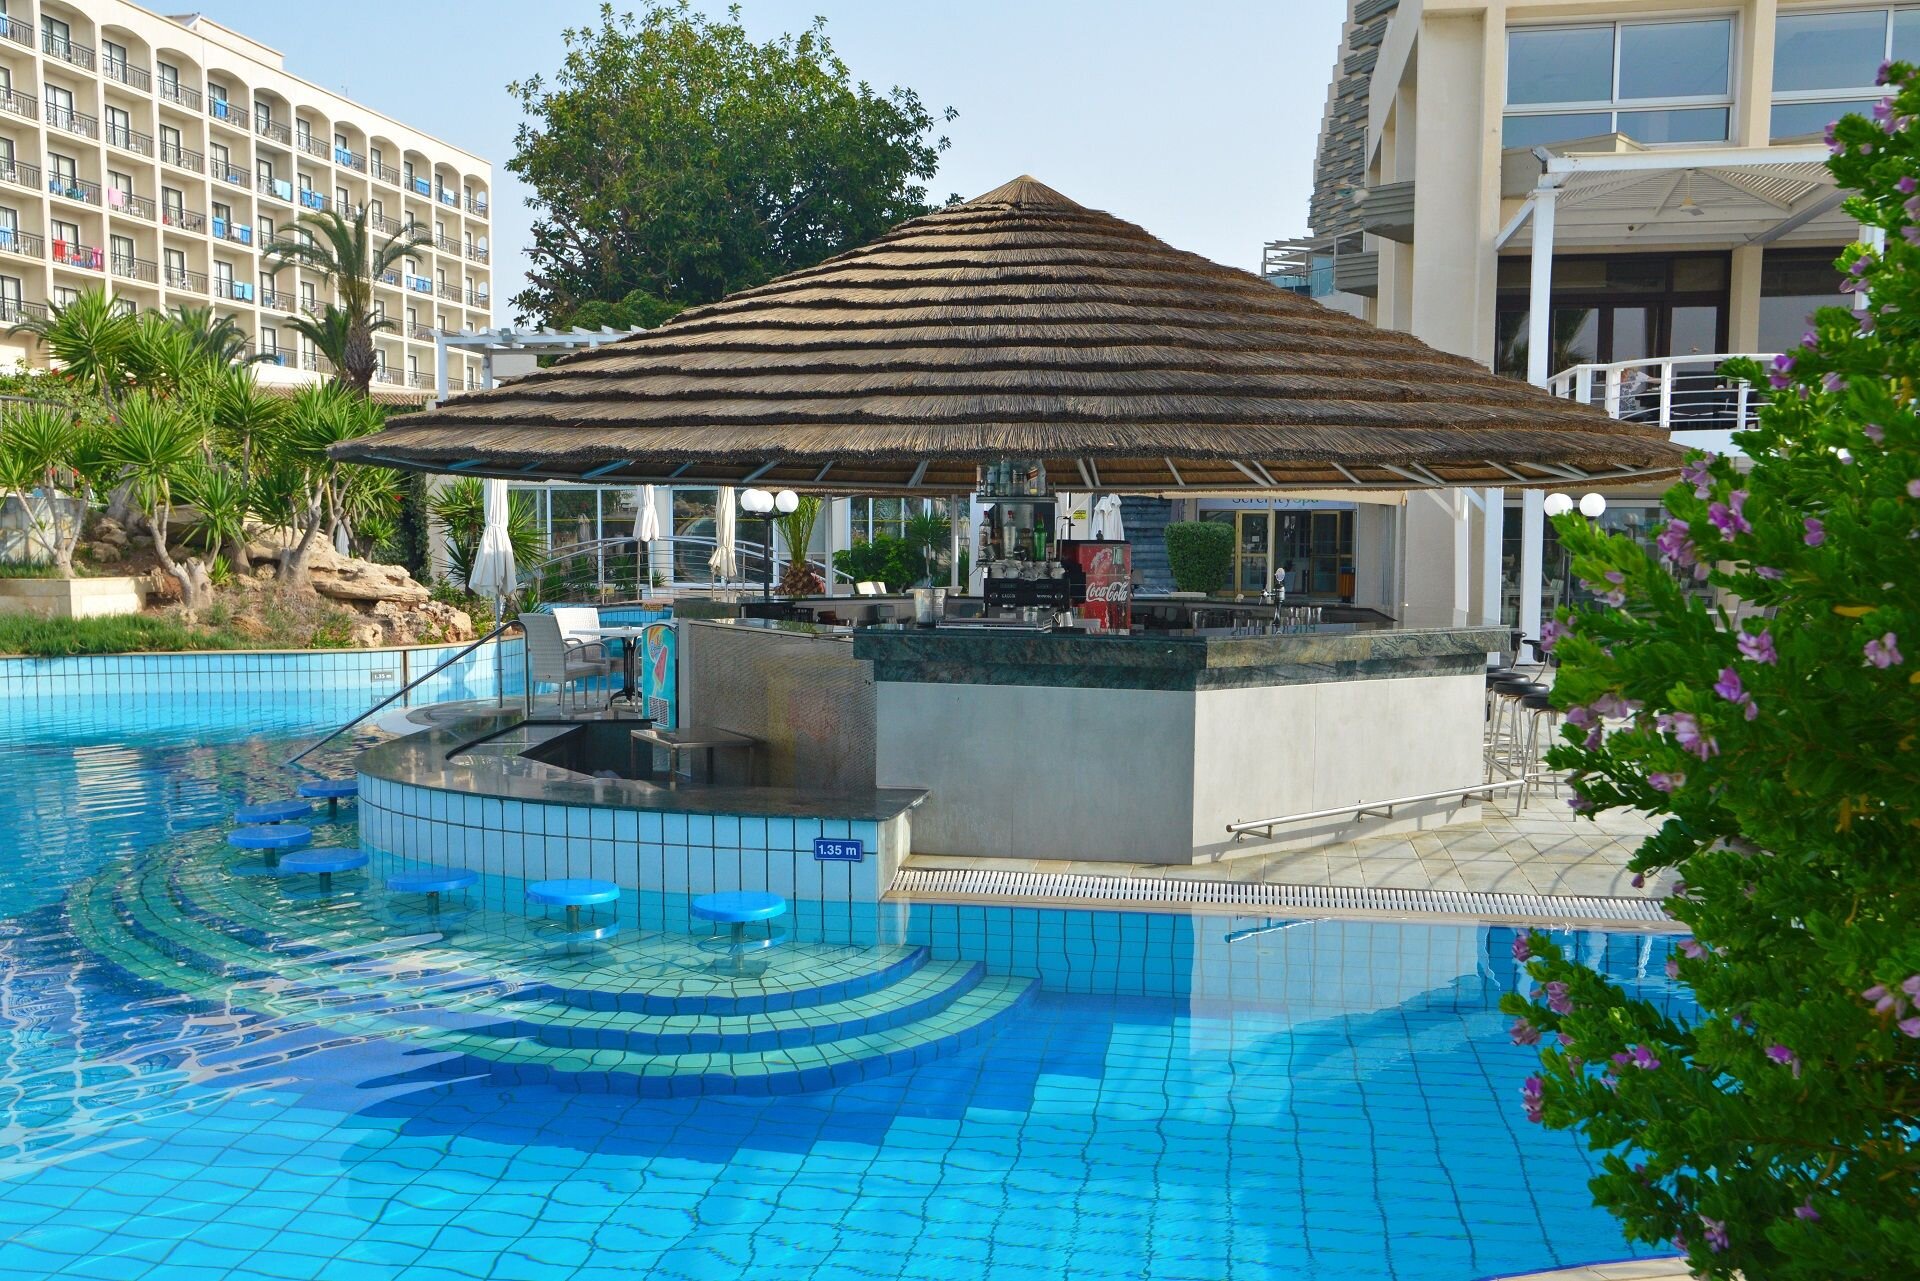 The Golden Bay Beach Hotel - Larnaca, Cyprus